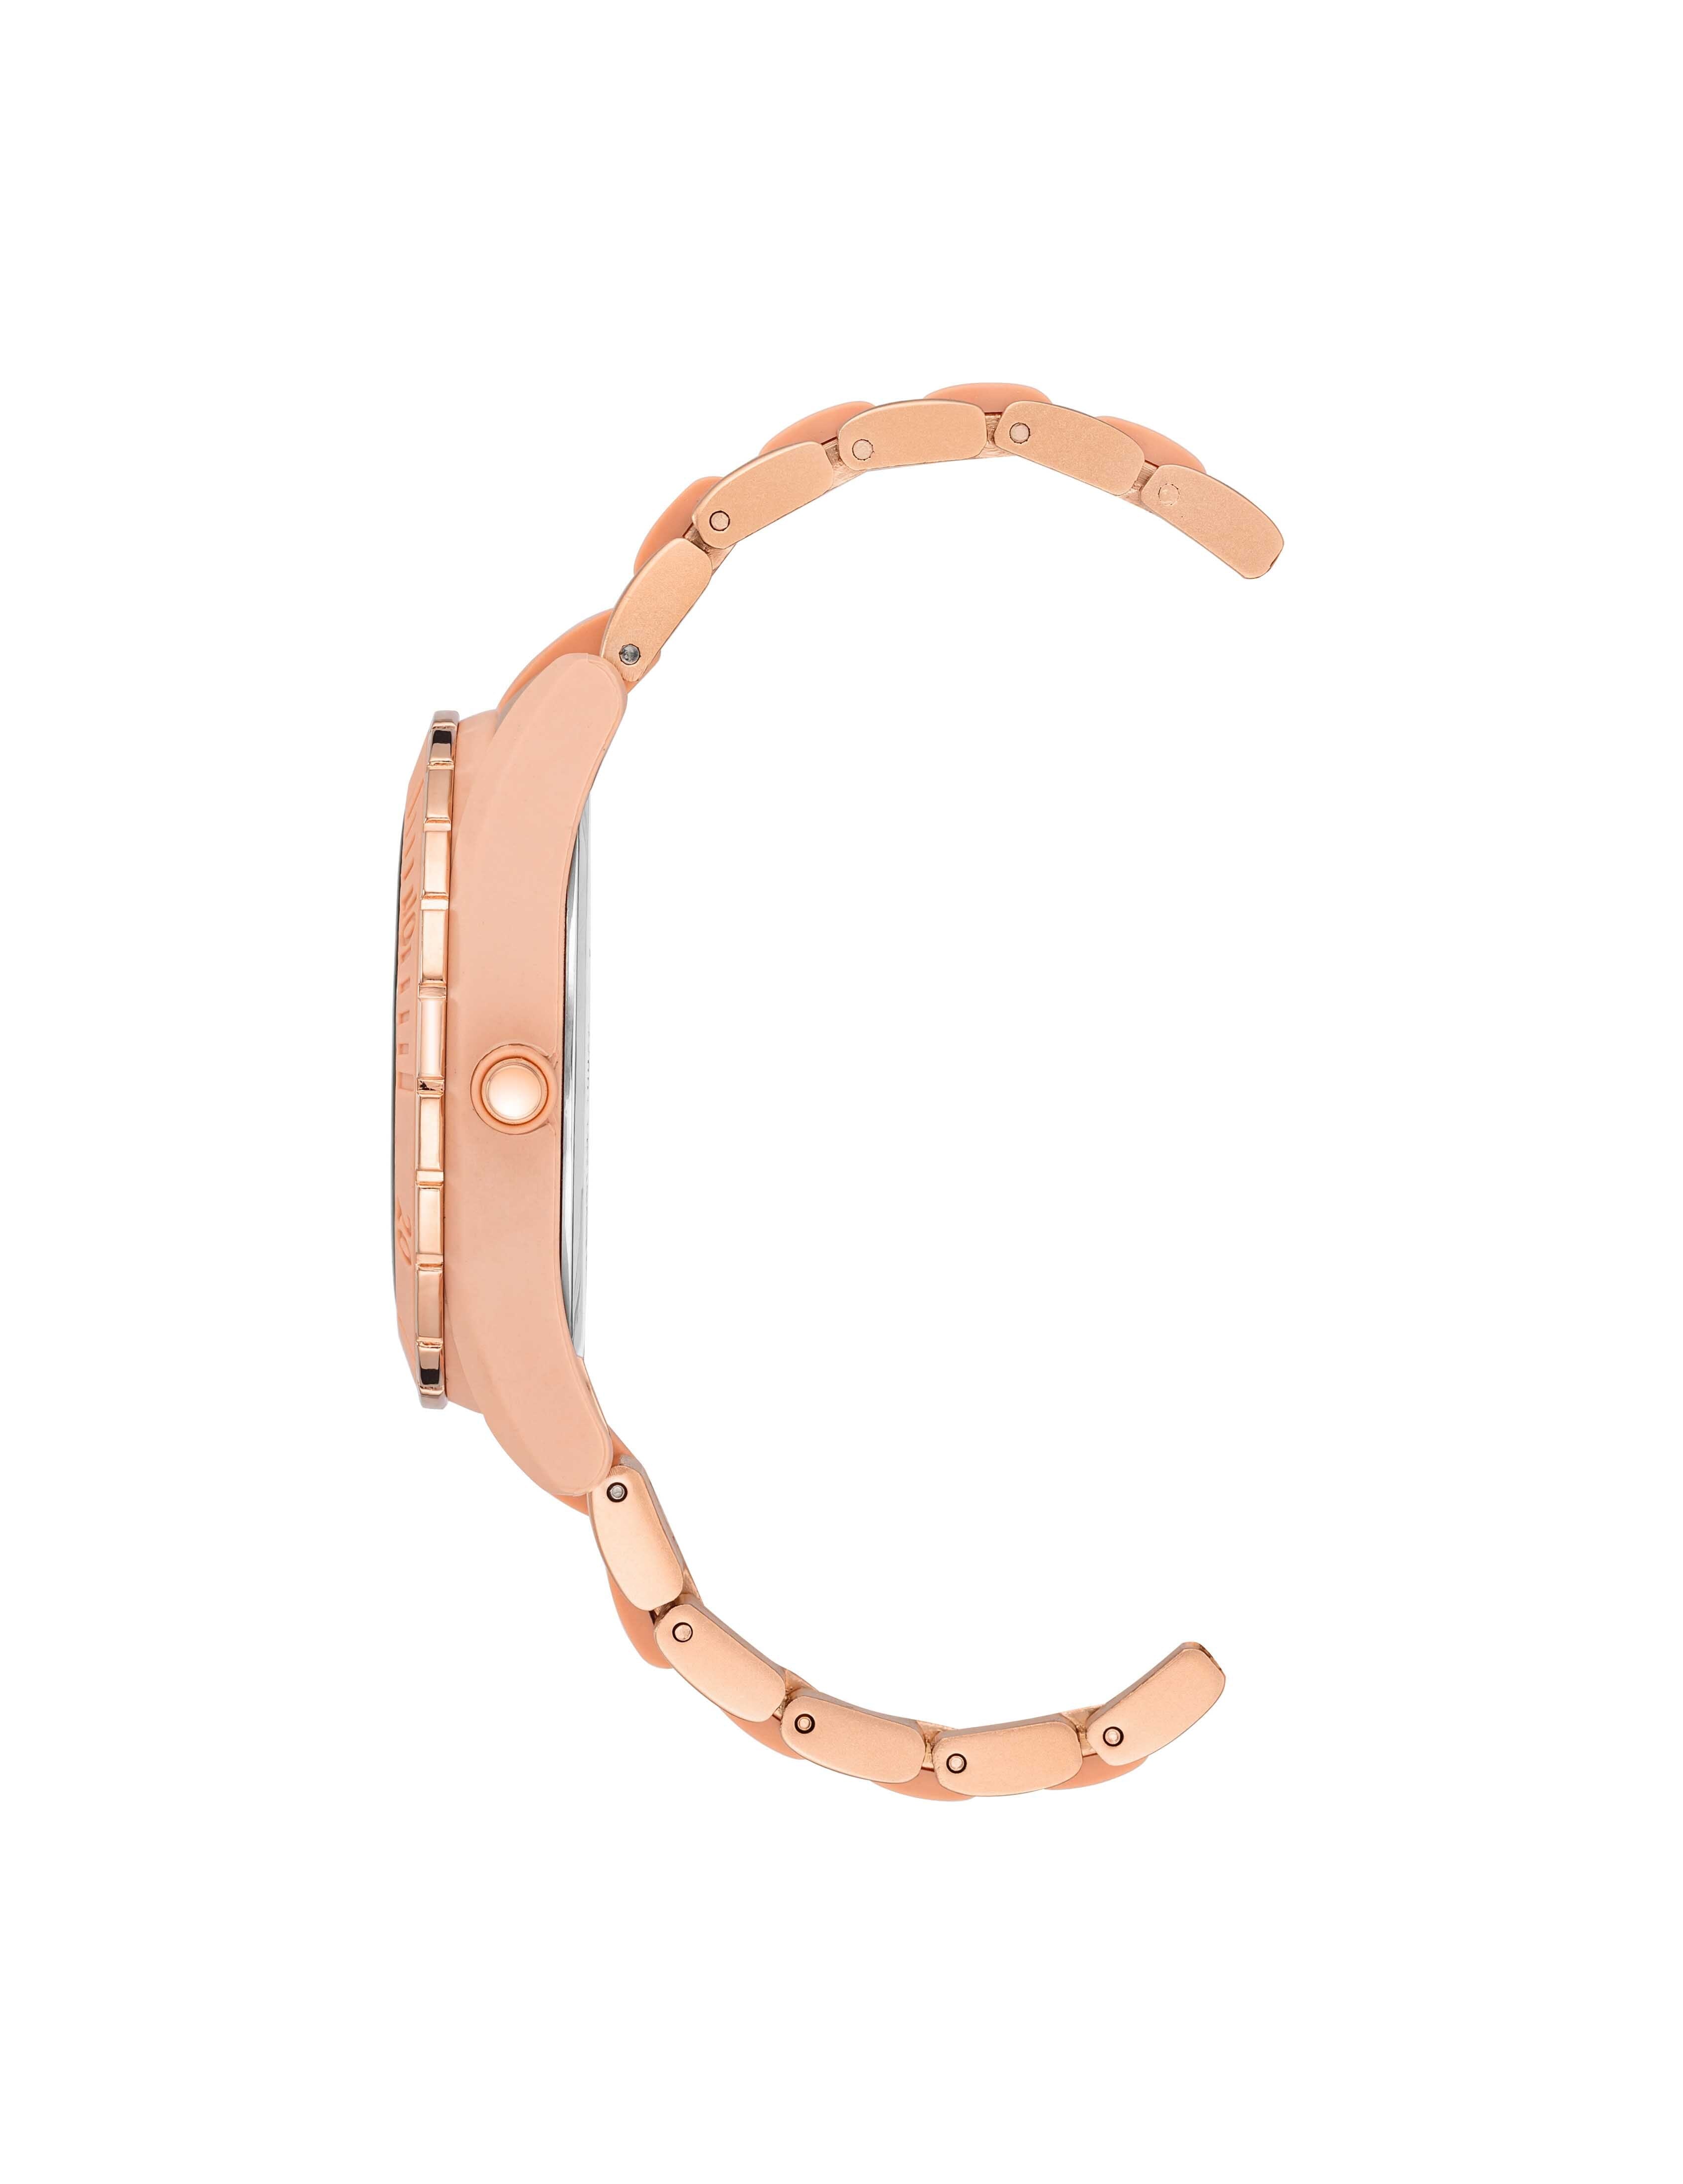 Anne Klein Women's Consider It Solar Recycled Ocean Plastic Bracelet Watch in Pink&Rose Gold-Tone